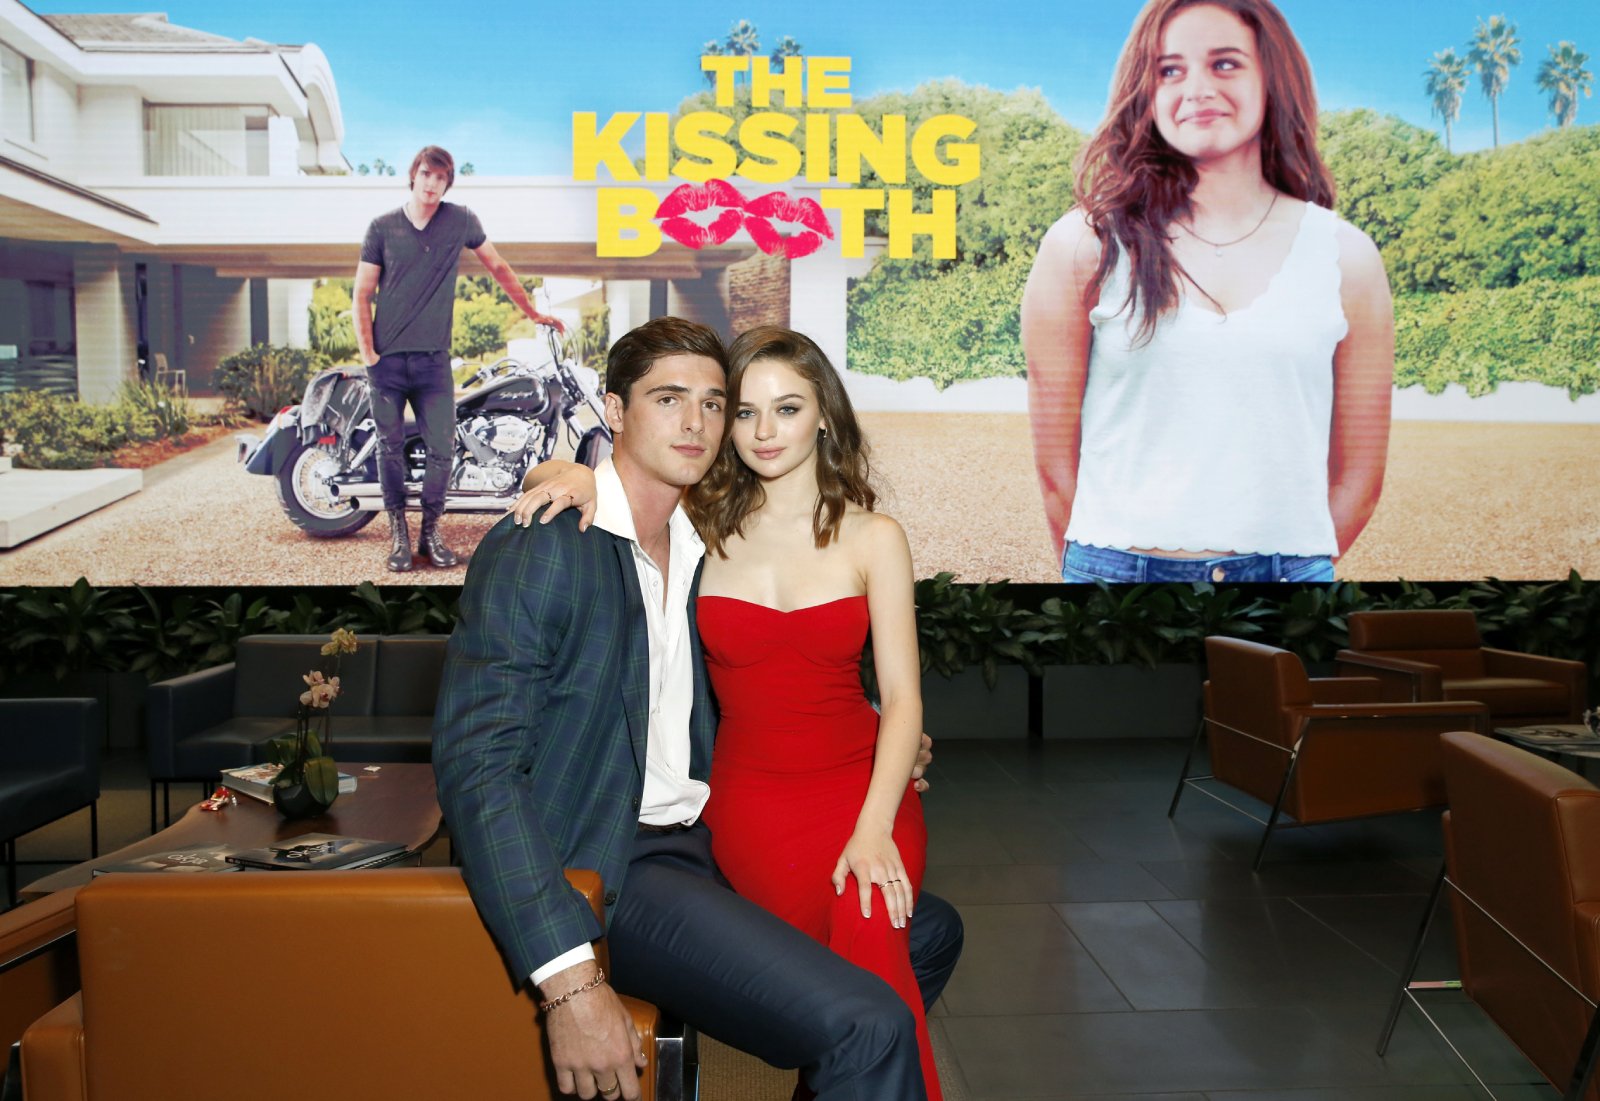 'The Kissing Booth' stars Jacob Elordi and Joey King